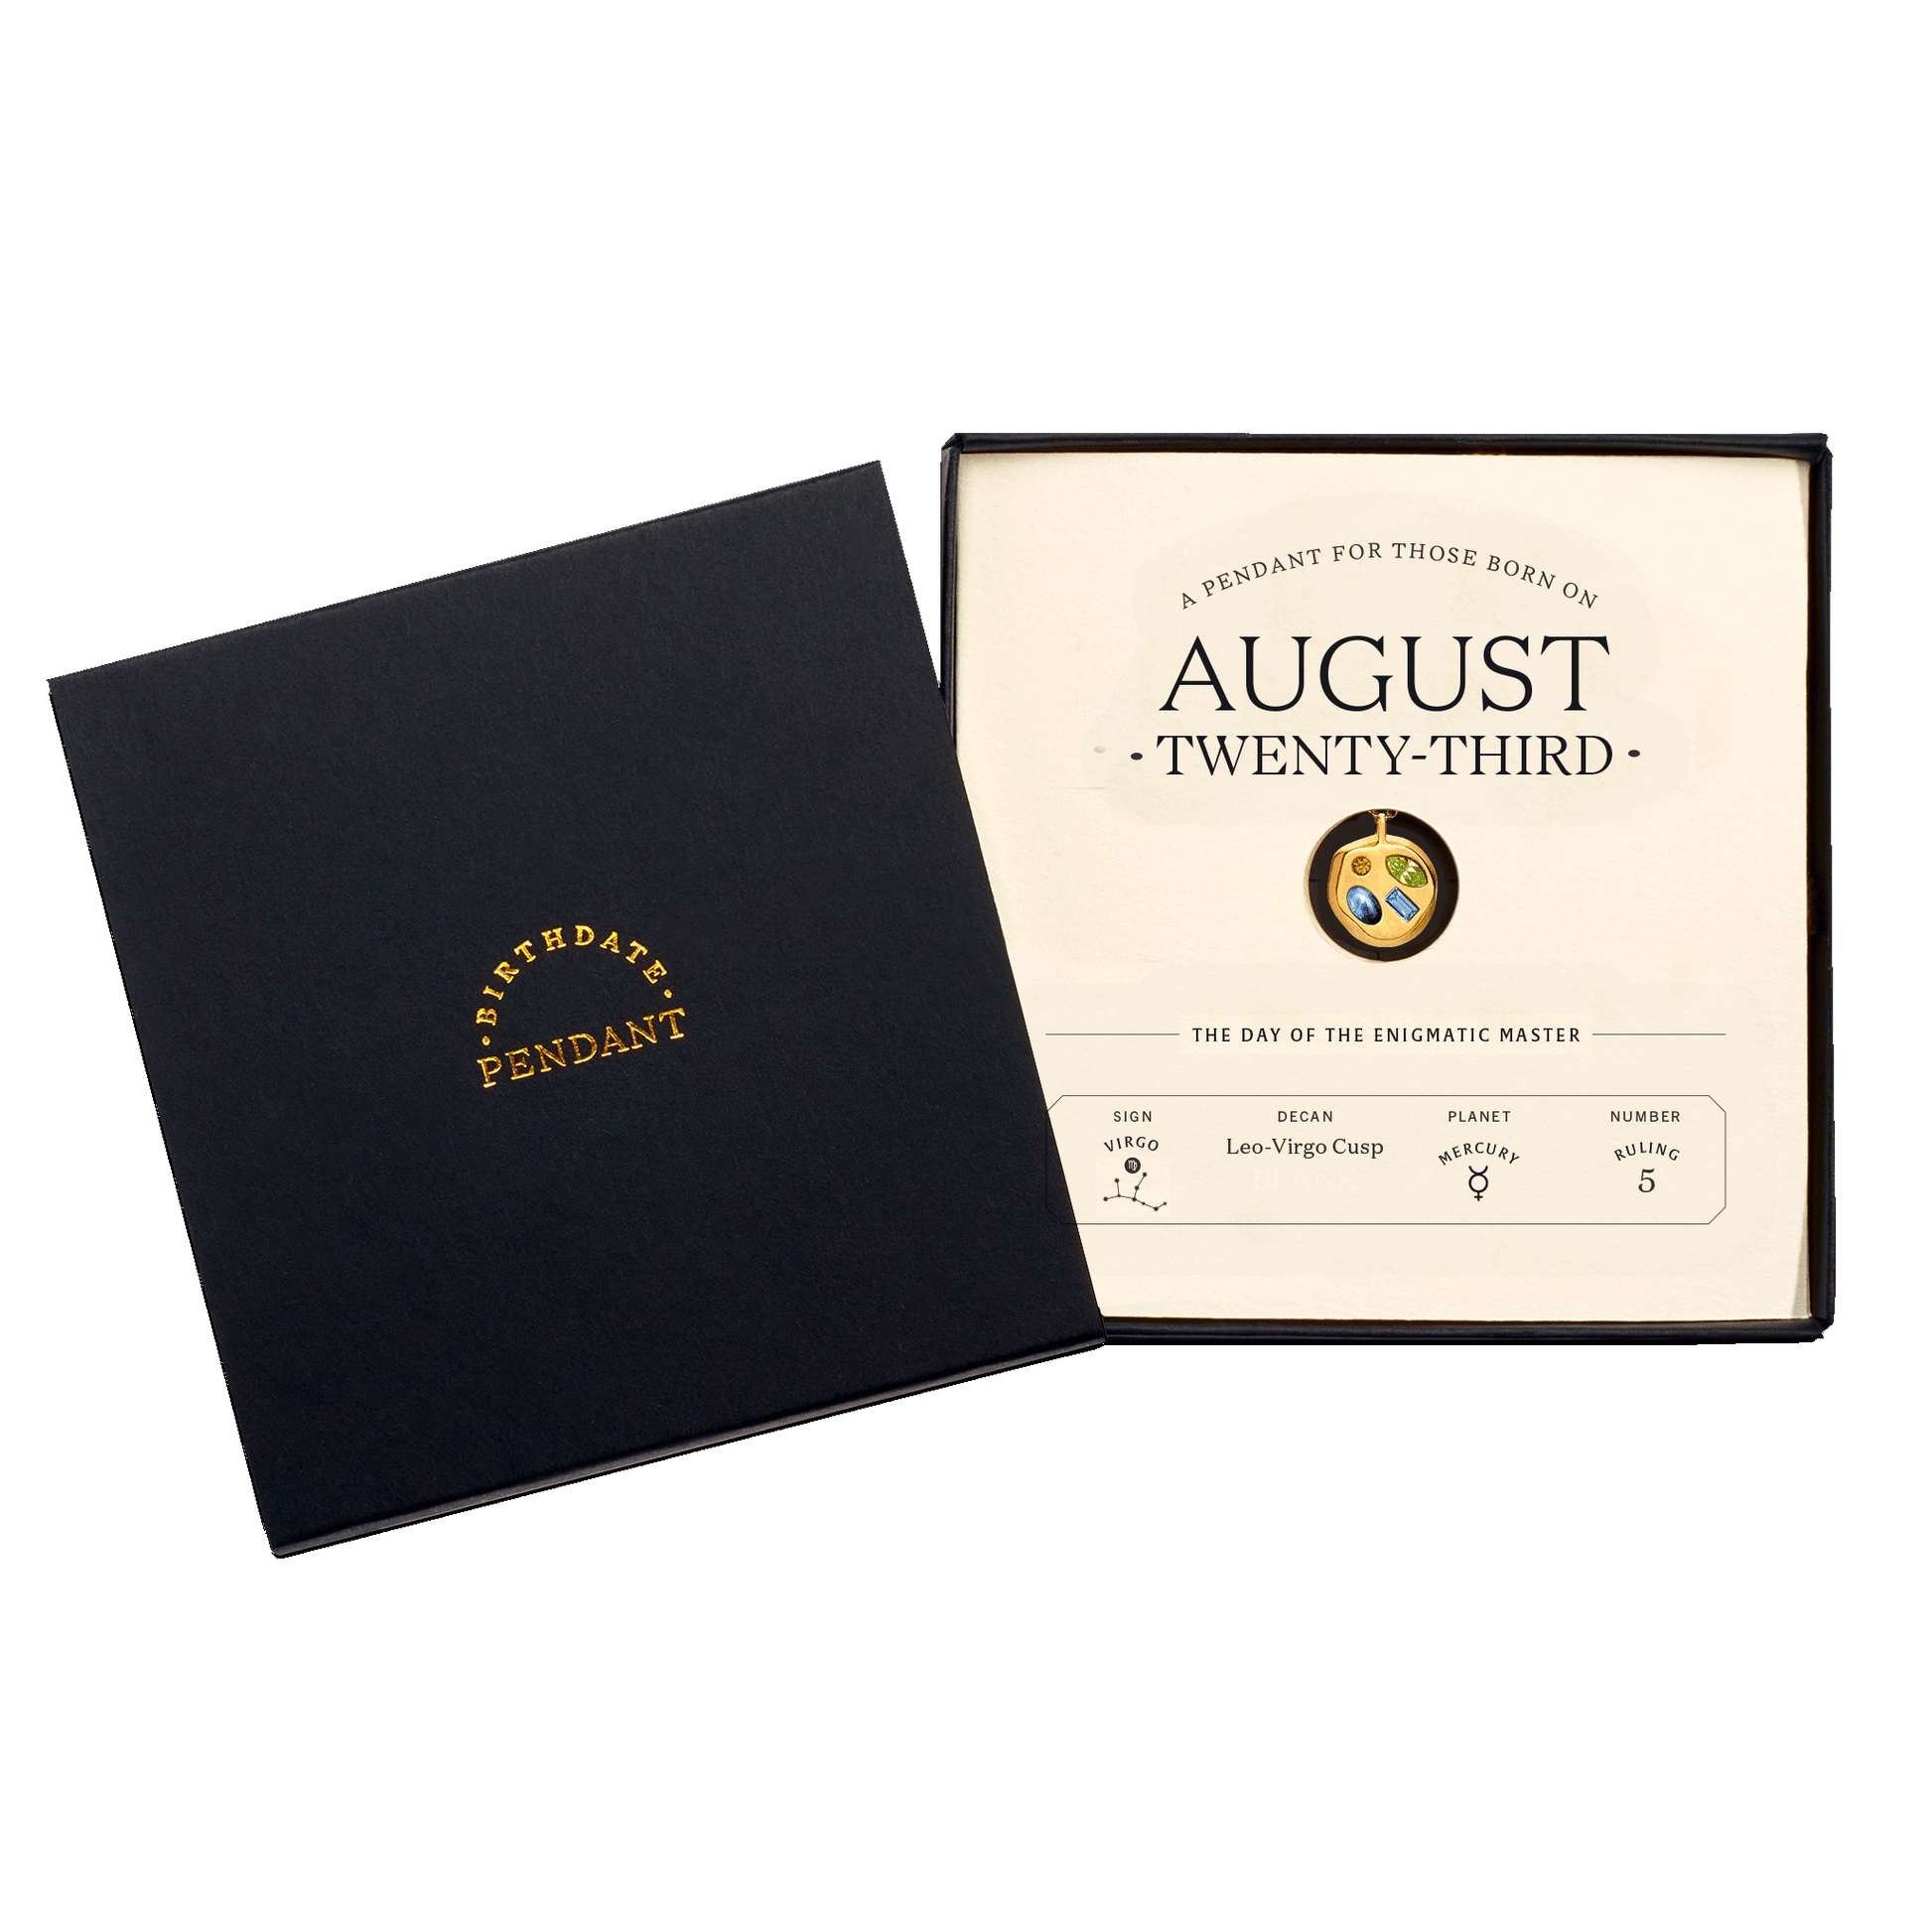 The August Twenty-Third Pendant inside its box